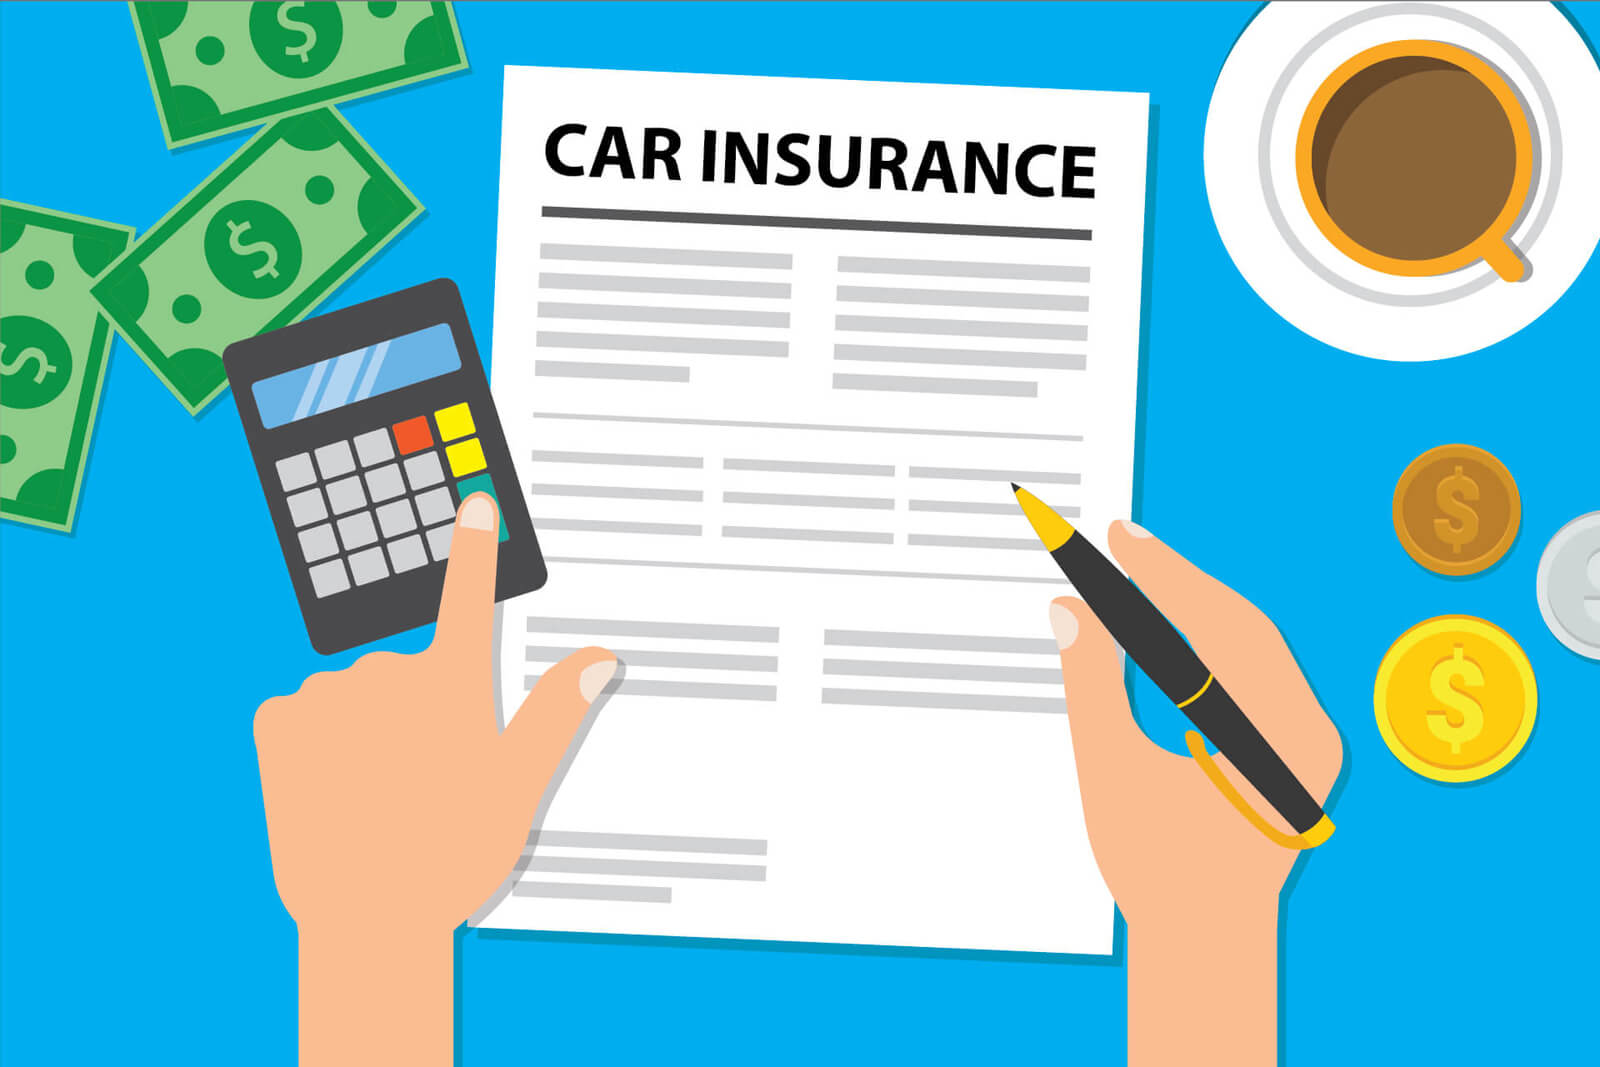 eee car insurance illustration